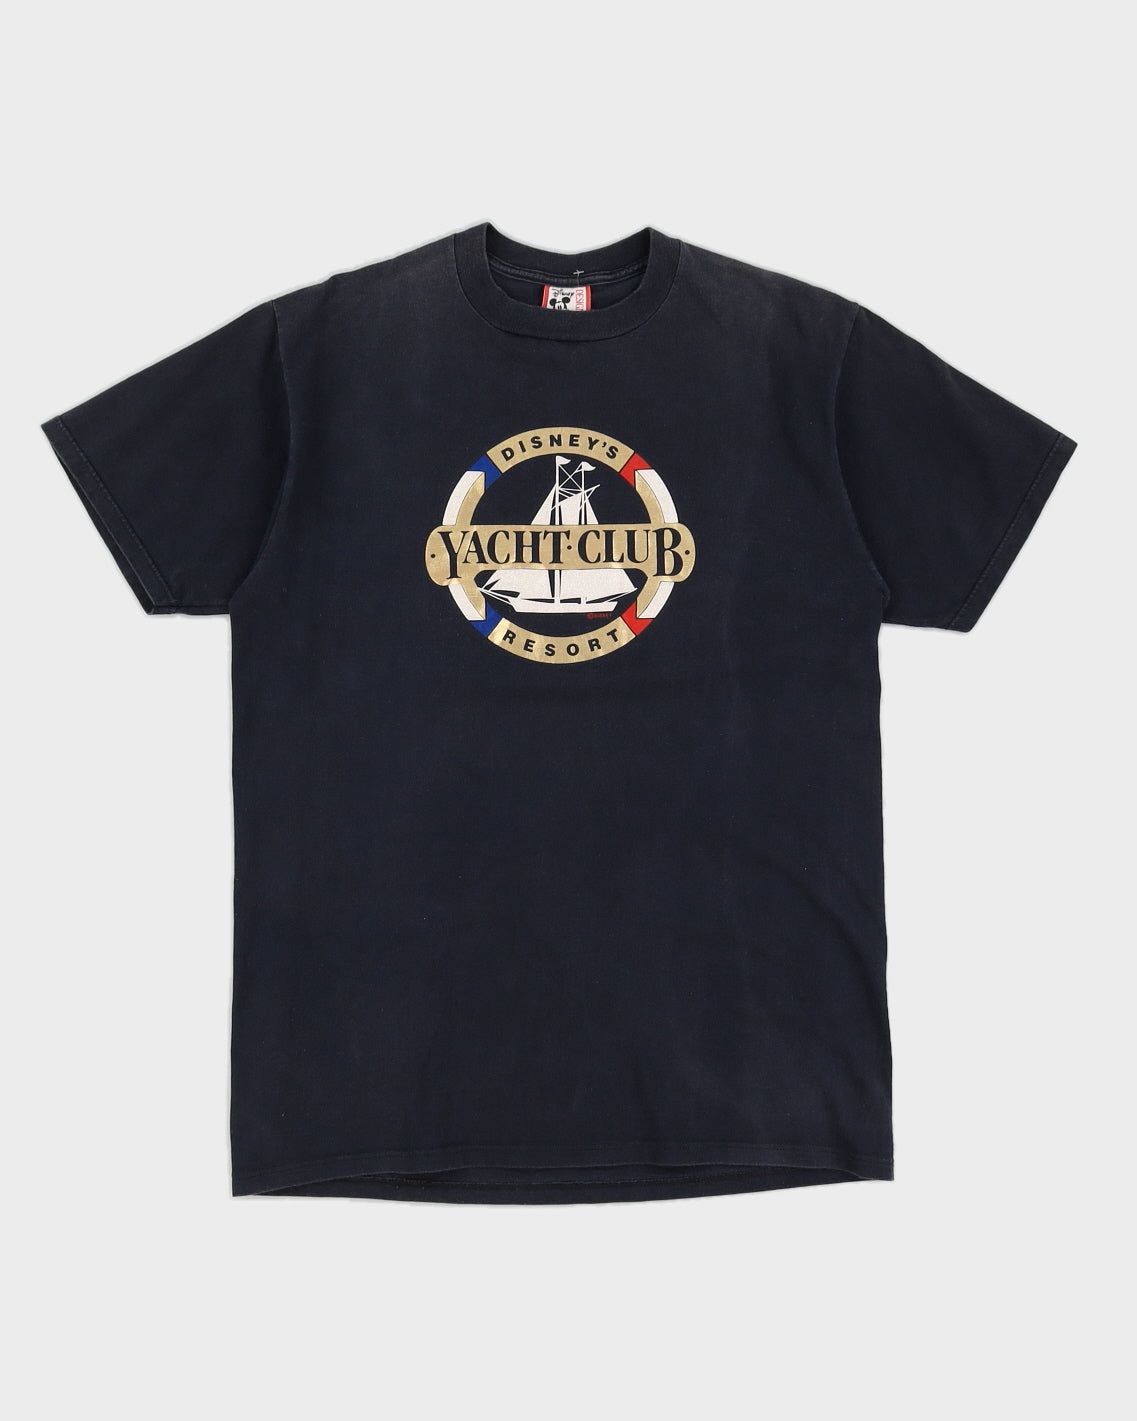 90s Disney Yacht Club T-Shirt - L